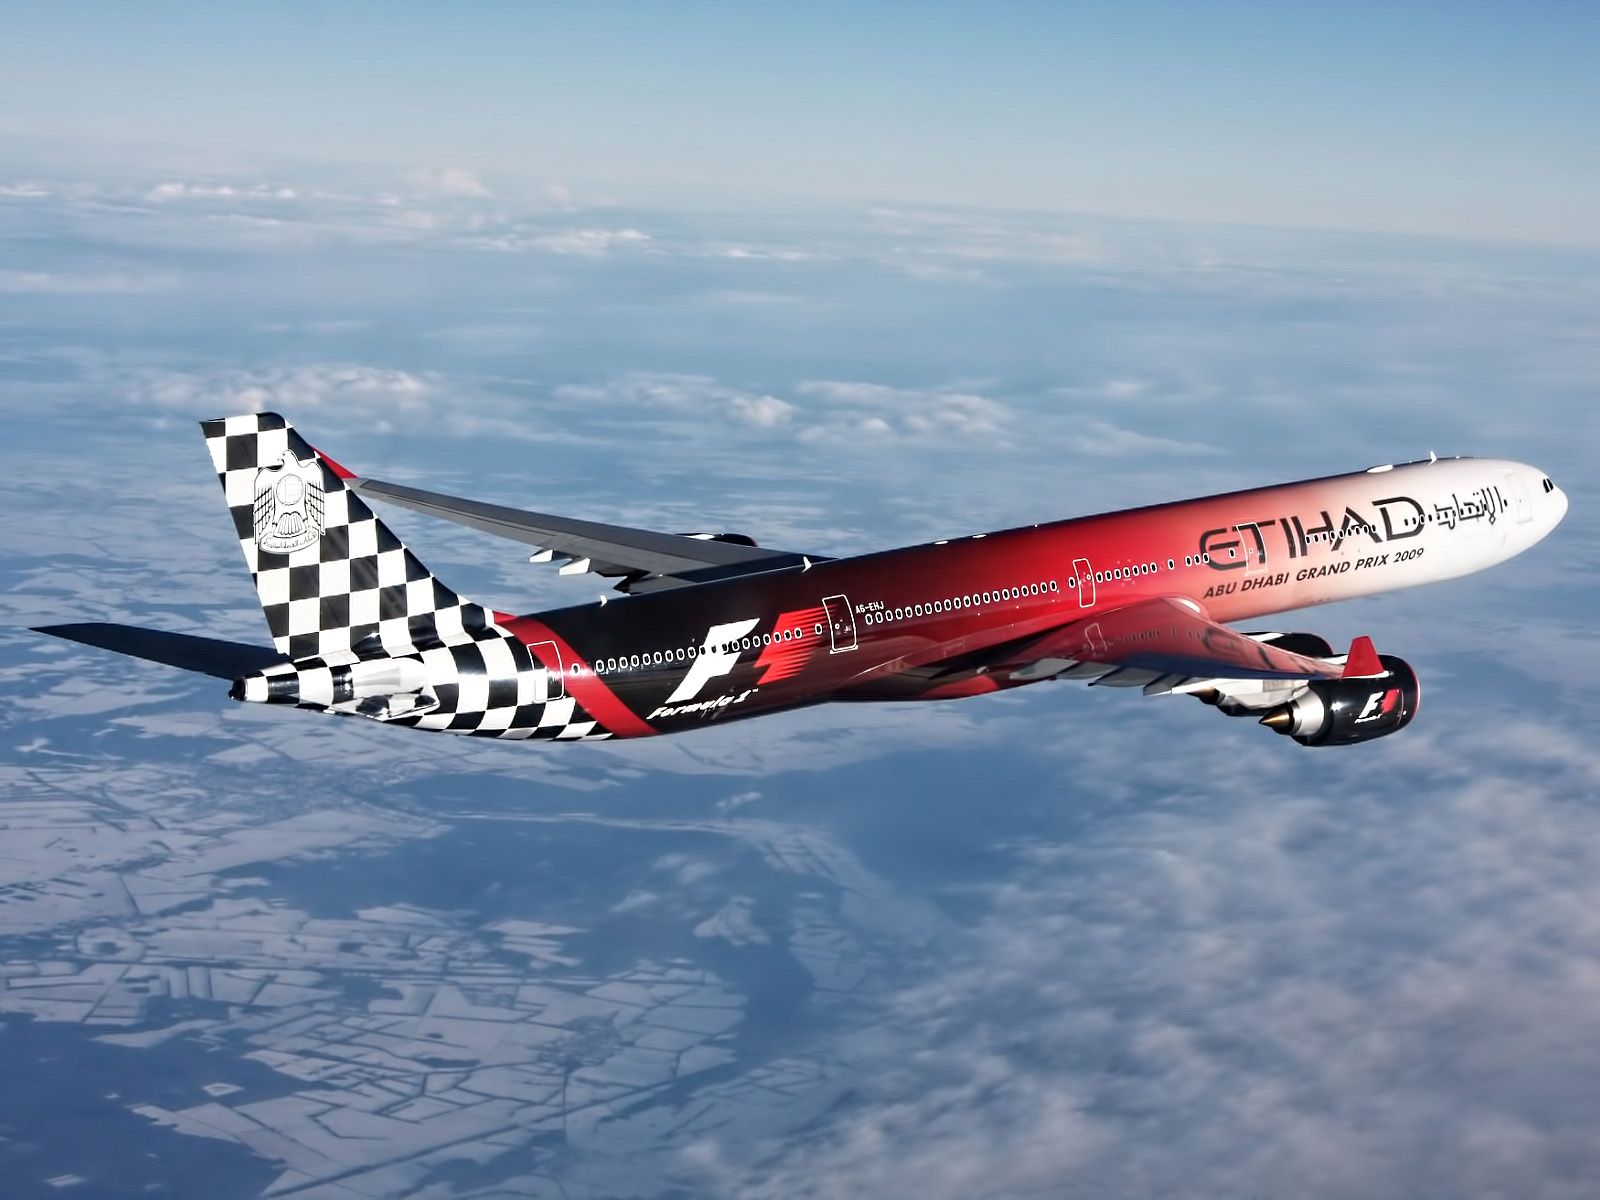 Wallpaper Etihad Airways, Abu Dhabi Grand Prix, A6 Ehj, Airbus